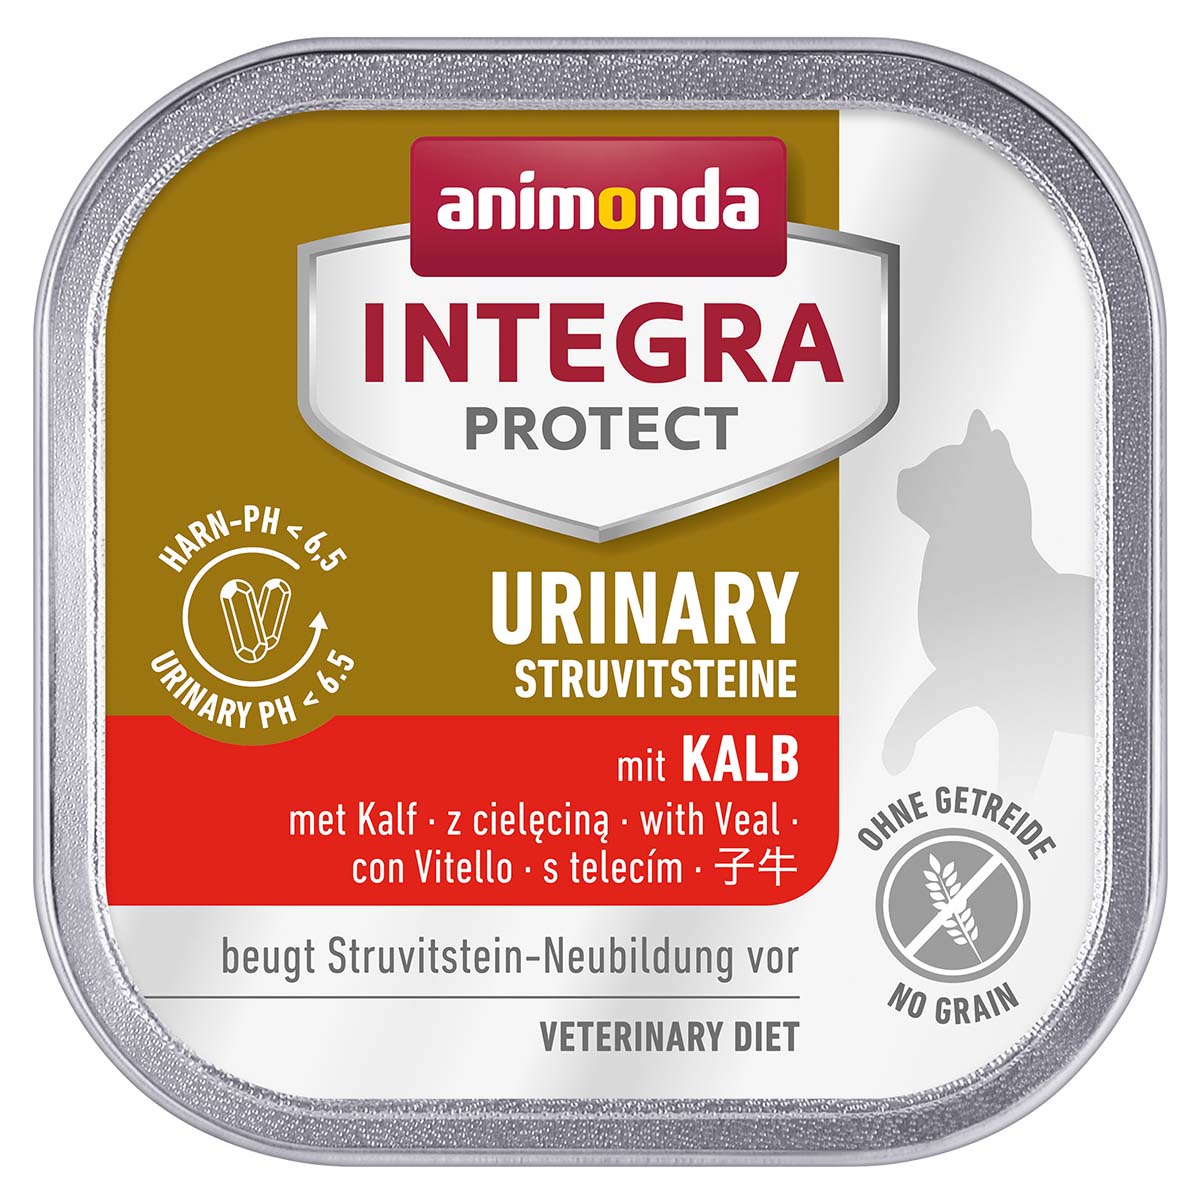 animonda INTEGRA PROTECT Adult Urinary Struvitstein mit Kalb 16x100g von animonda Integra Protect